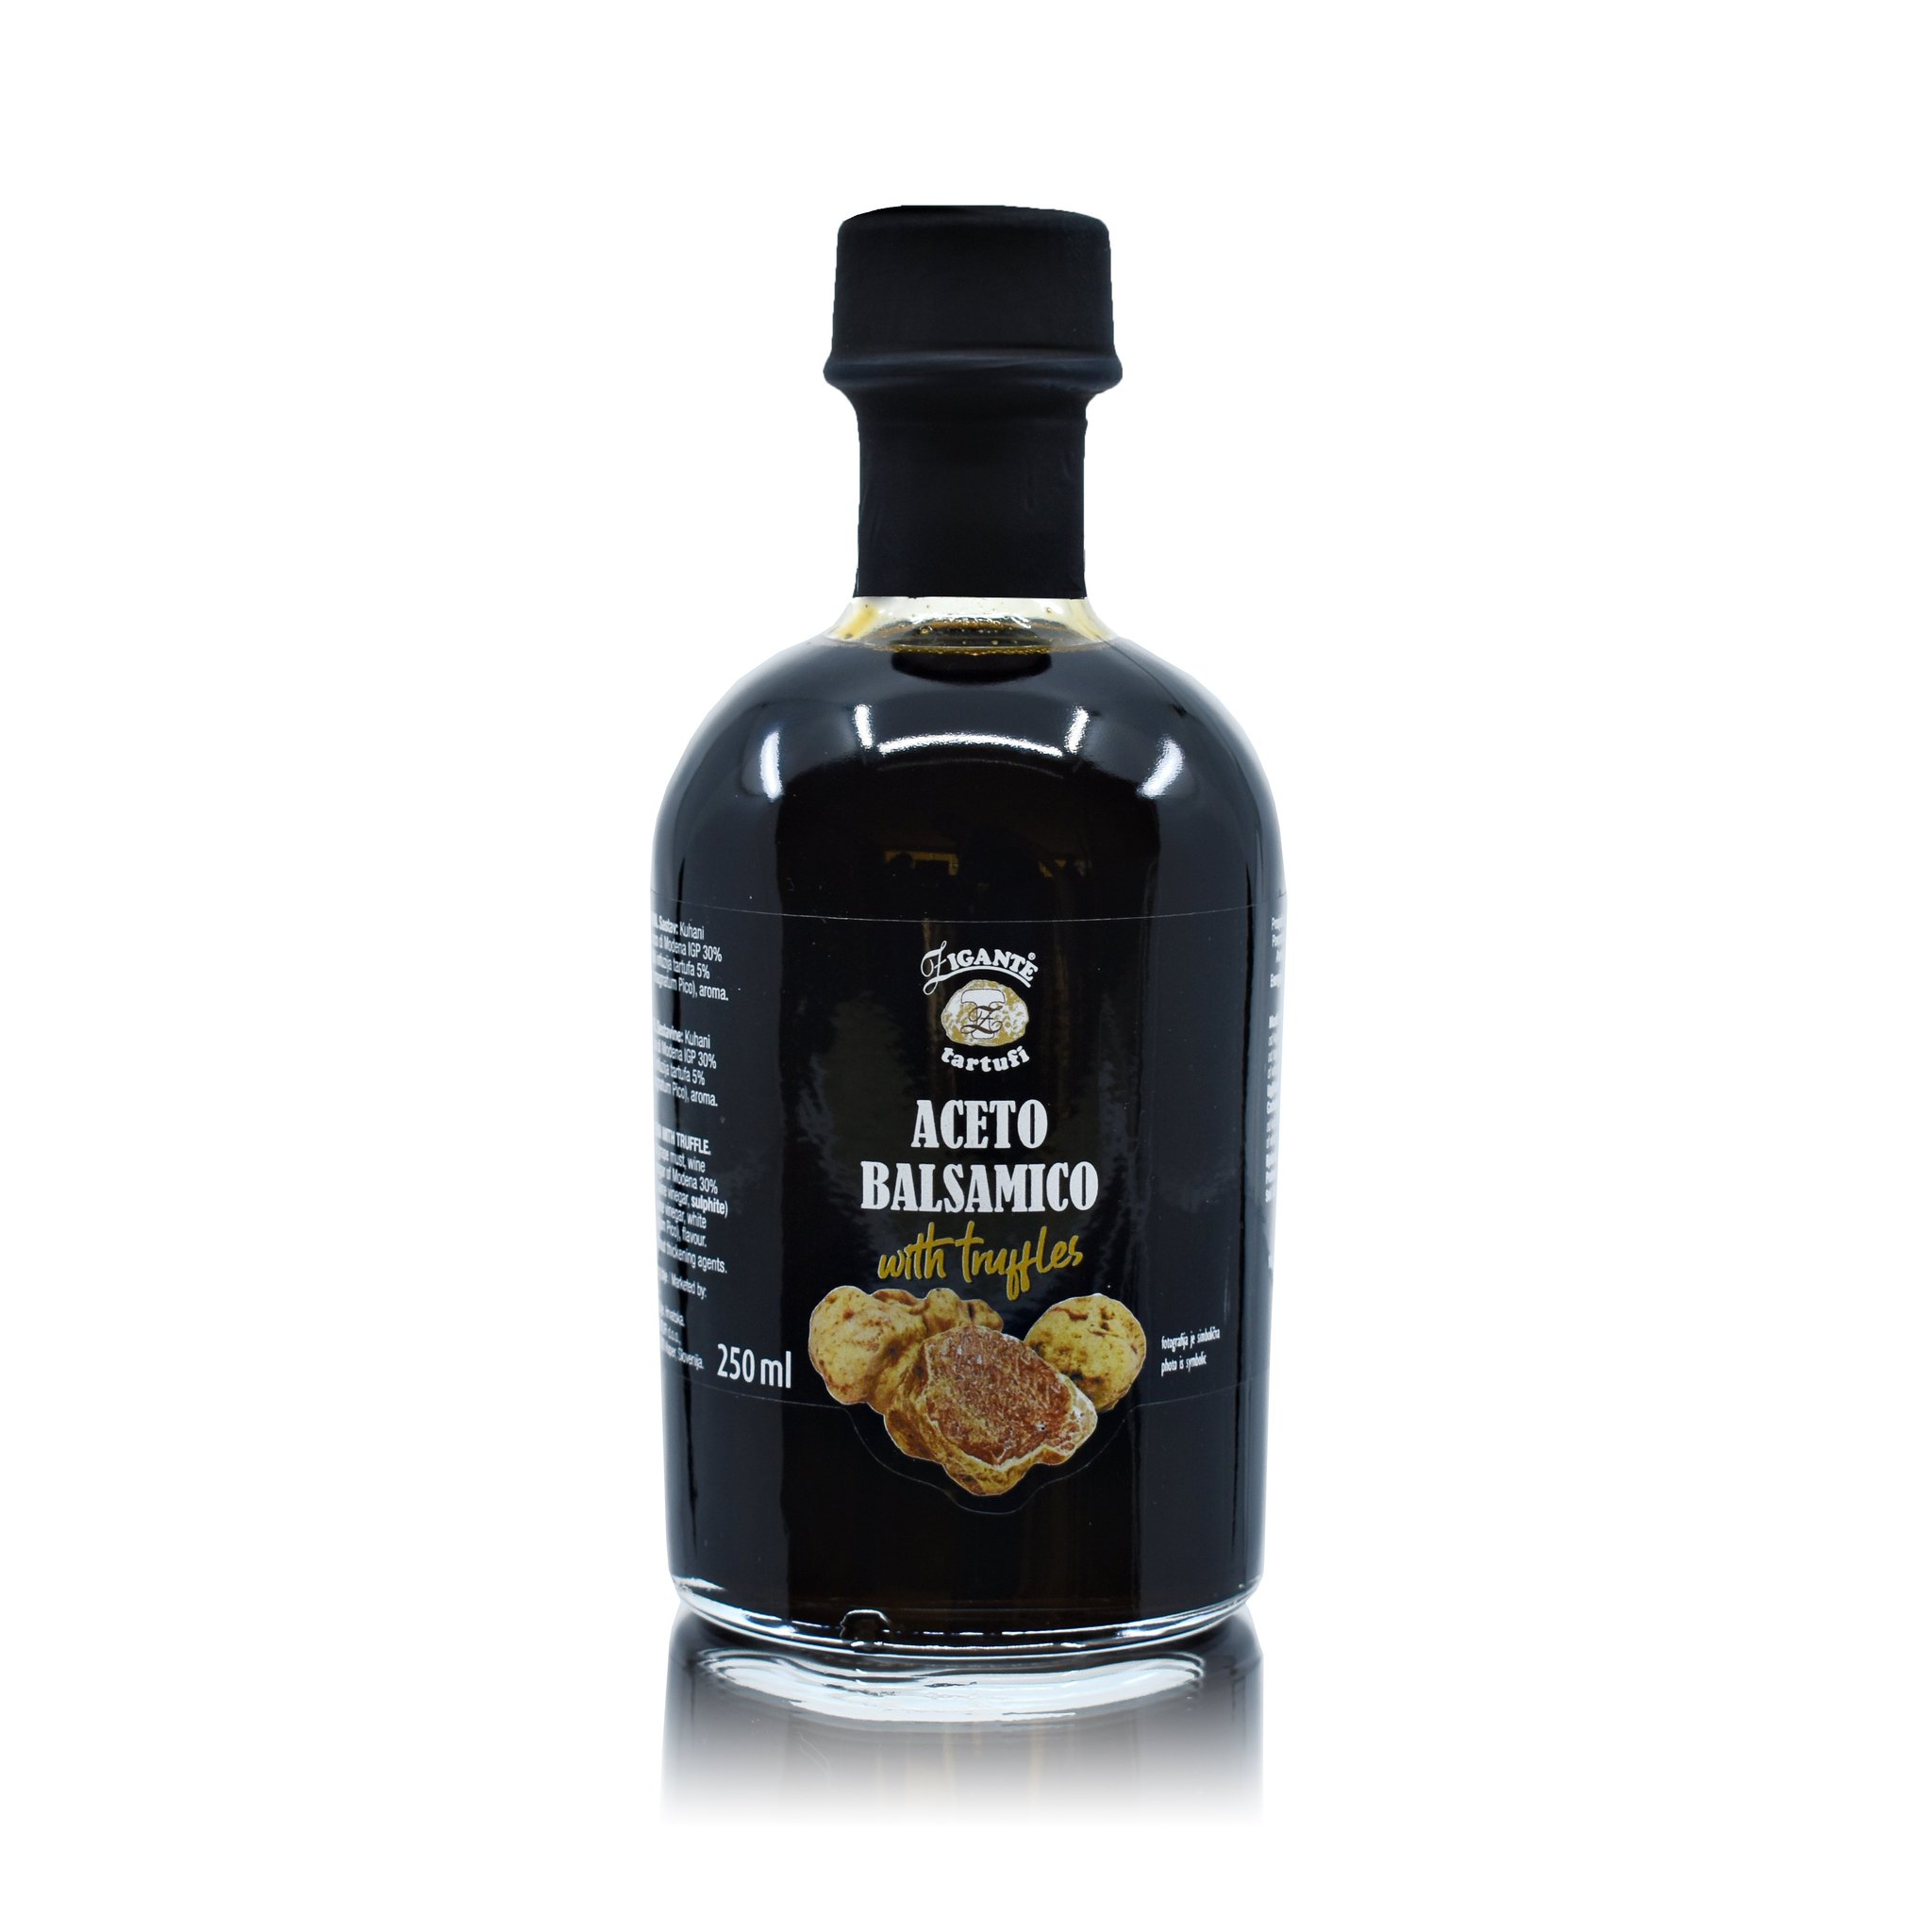 Balsamic vinegar of modena with truffle